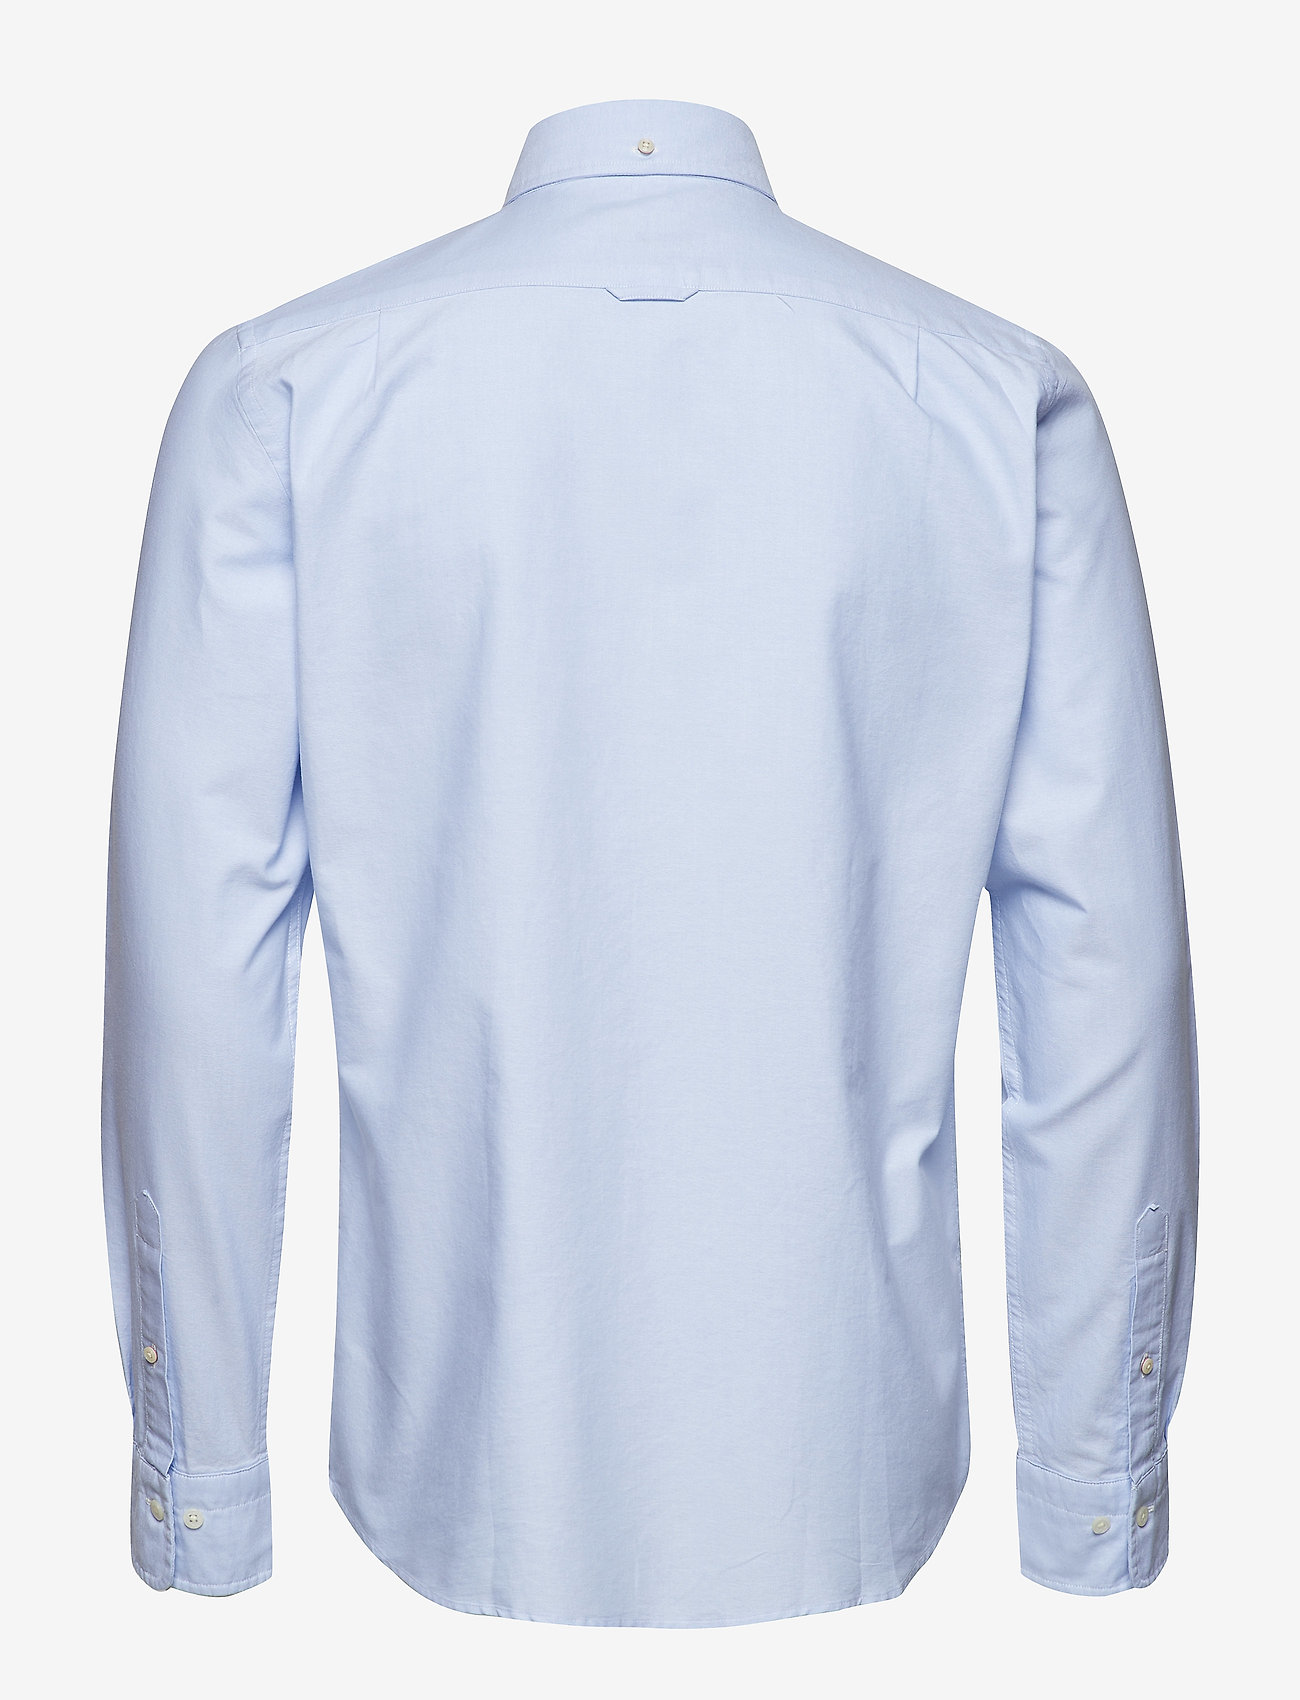 GANT - SLIM OXFORD SHIRT BD - oxford skjorter - capri blue - 1